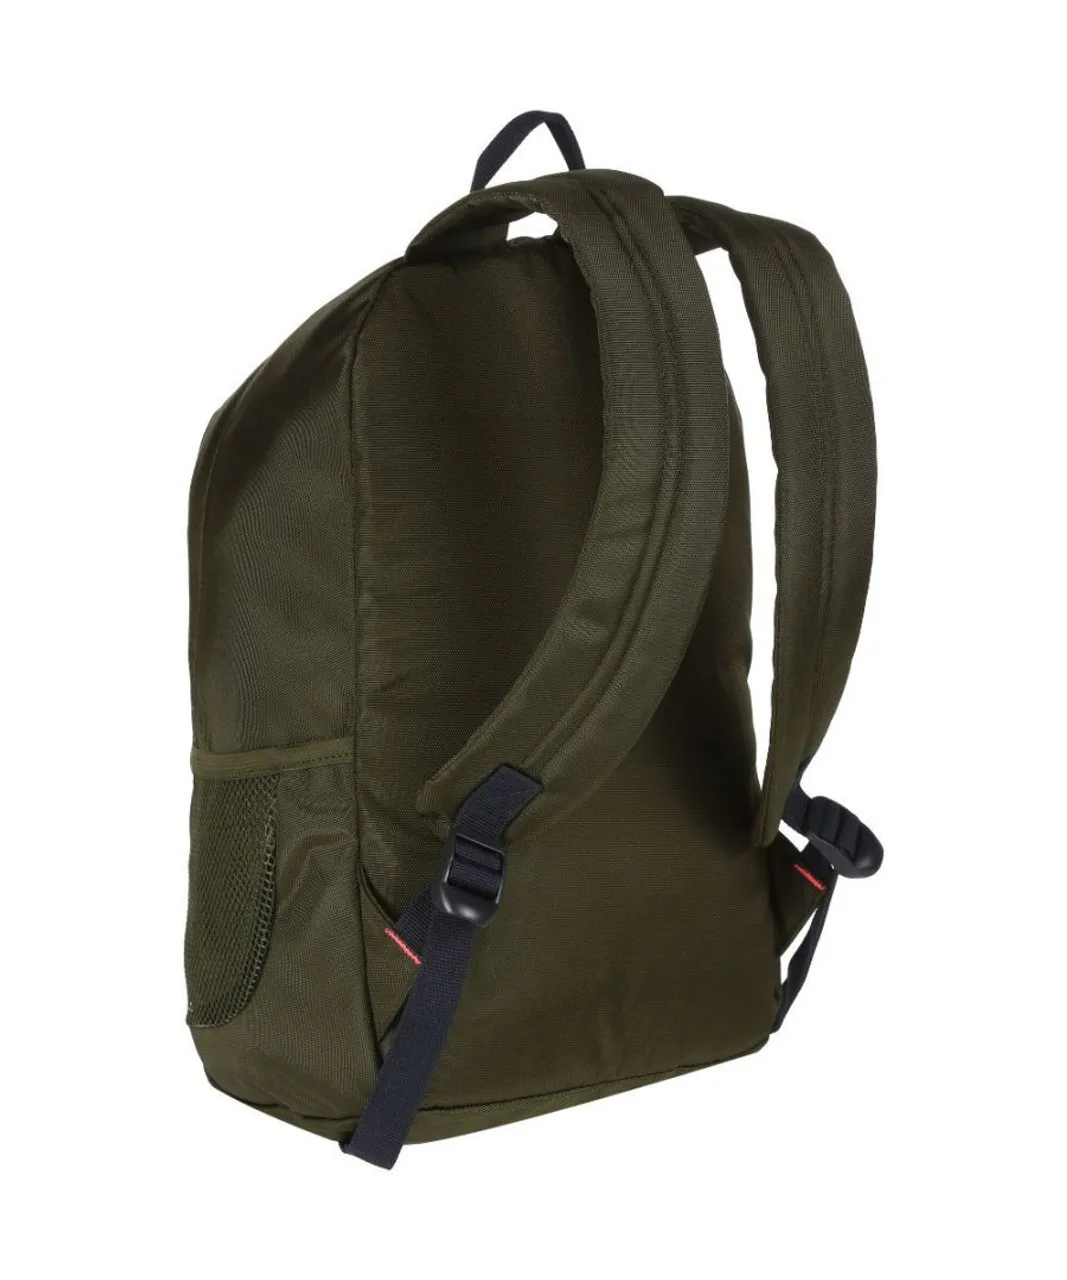 Regatta Boys & Girls Jaxon III Padded Hardwearing Zip-Up 10L Backpack - Green - One Size